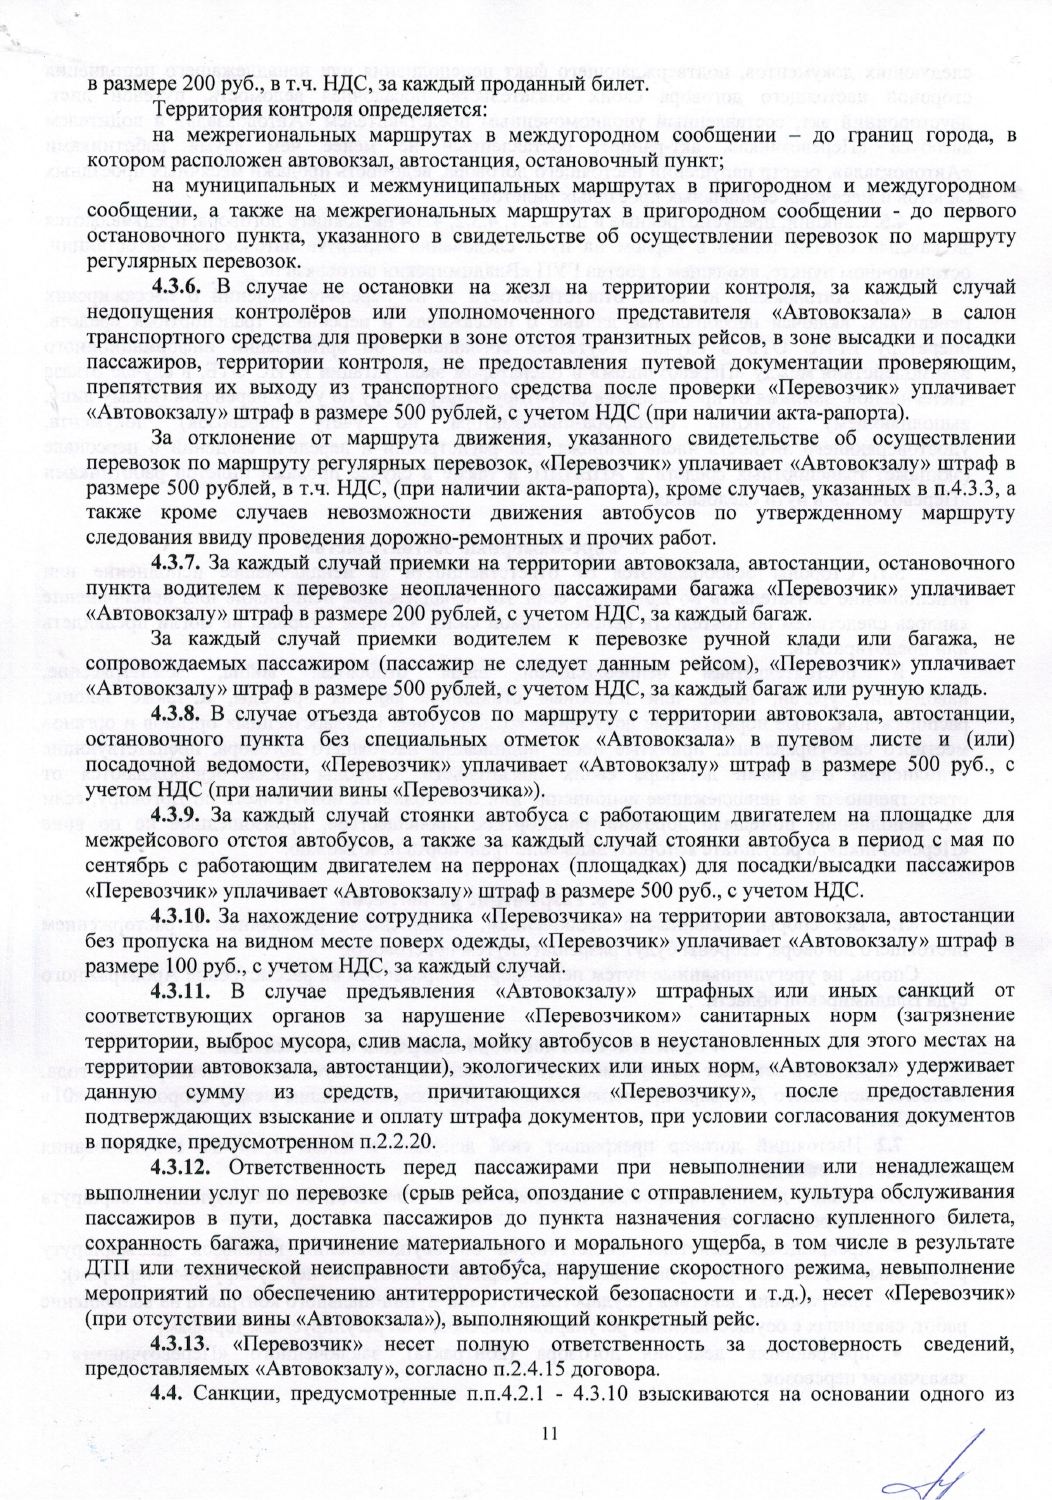 Договор ГУП владимиский вокзал-11.jpg